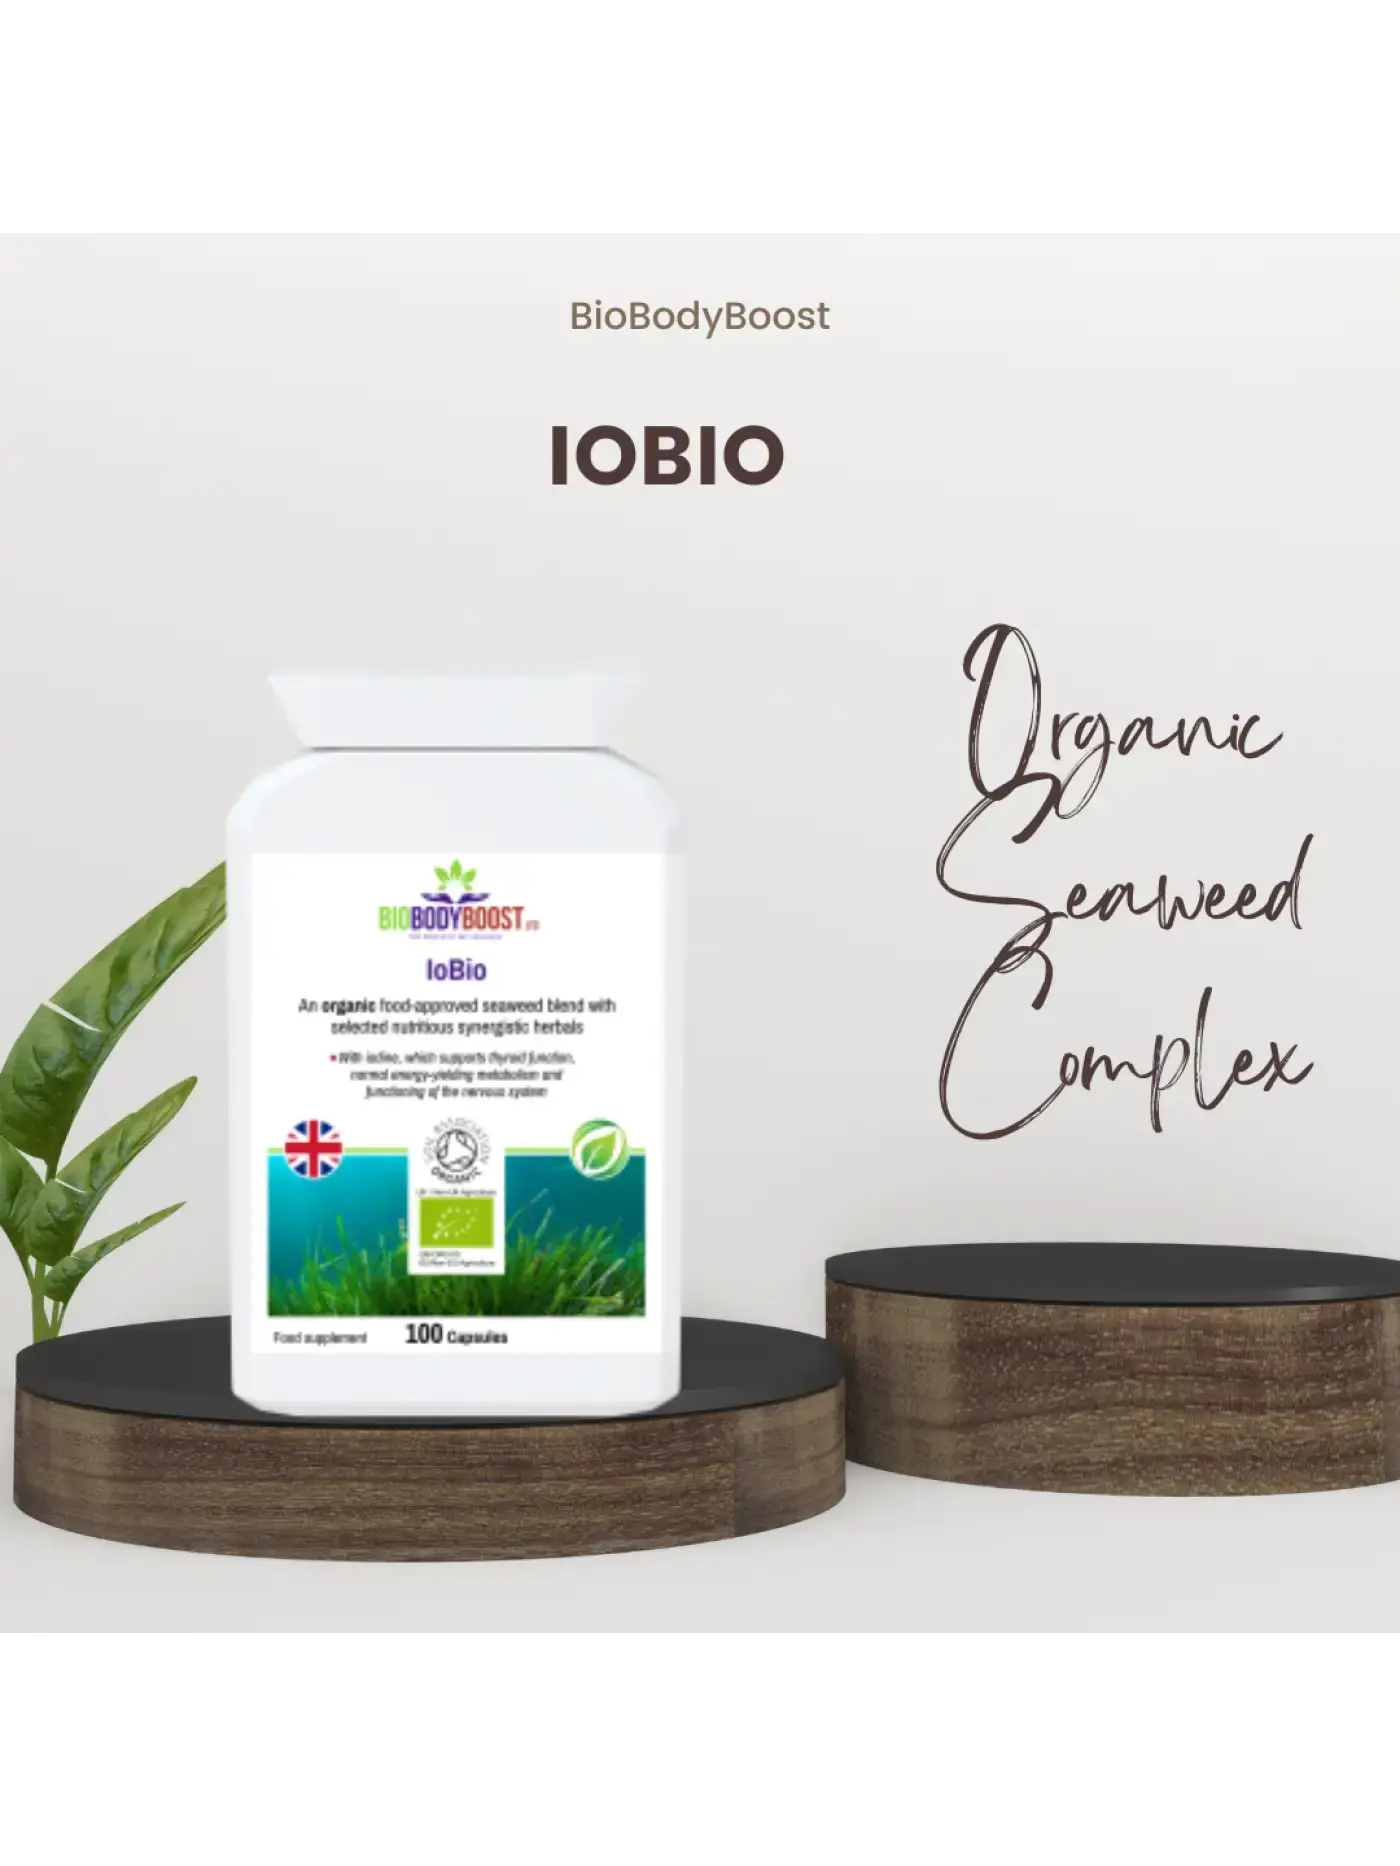 Biobodyboost Health & Wellness Travel Pack - Portable Food Supplement Bundle - Premium Food Supplement from BioBodyBoost - Just £47.97! Shop now at BioBodyBoost